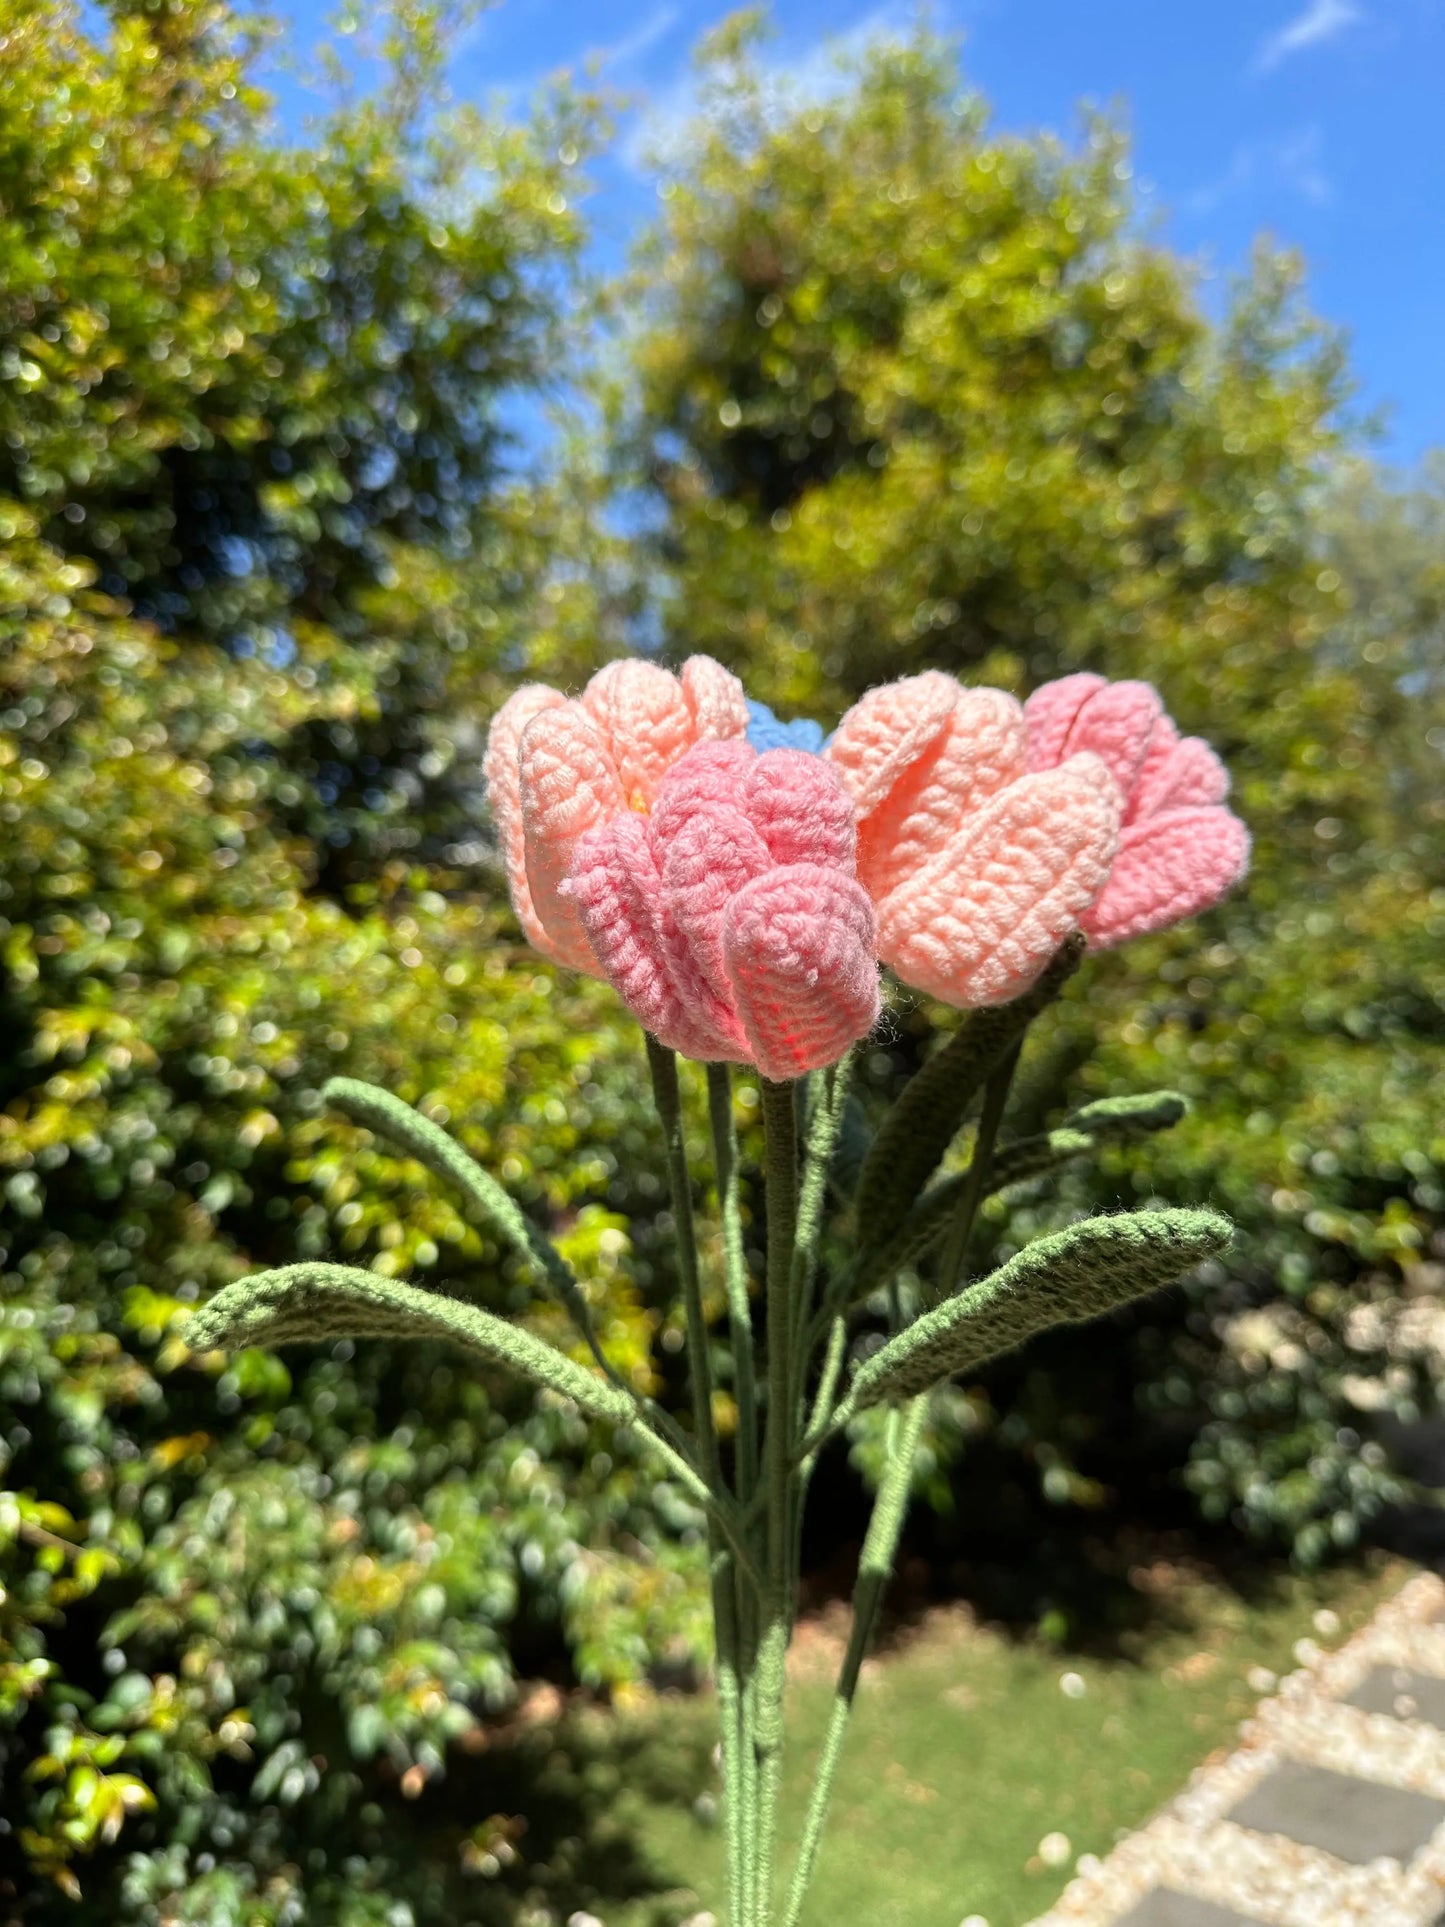 Hand knitted Blossom Tulip Sunday's Creative